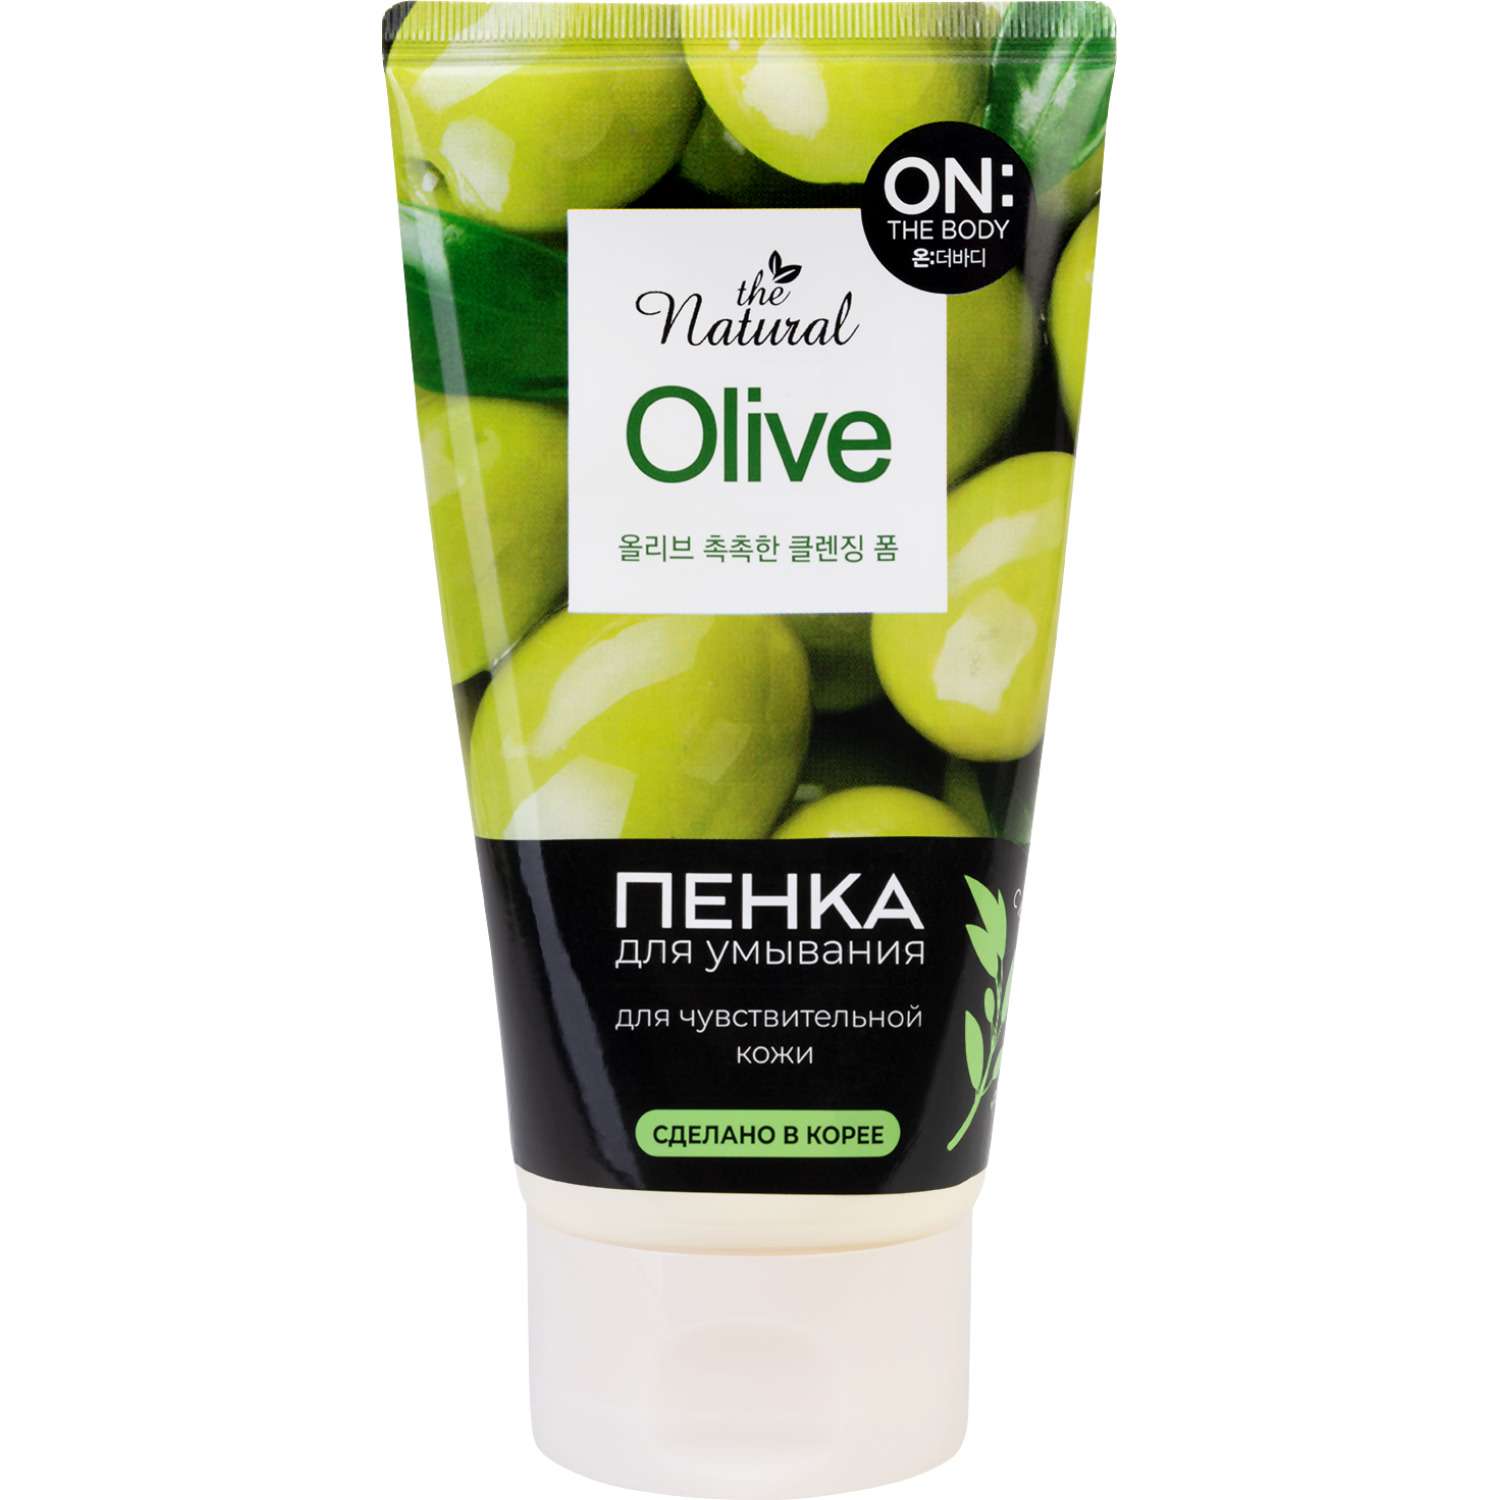 Пенка ON THE BODY LG для умывания natural olive с маслом оливы 120 гр - фото 1